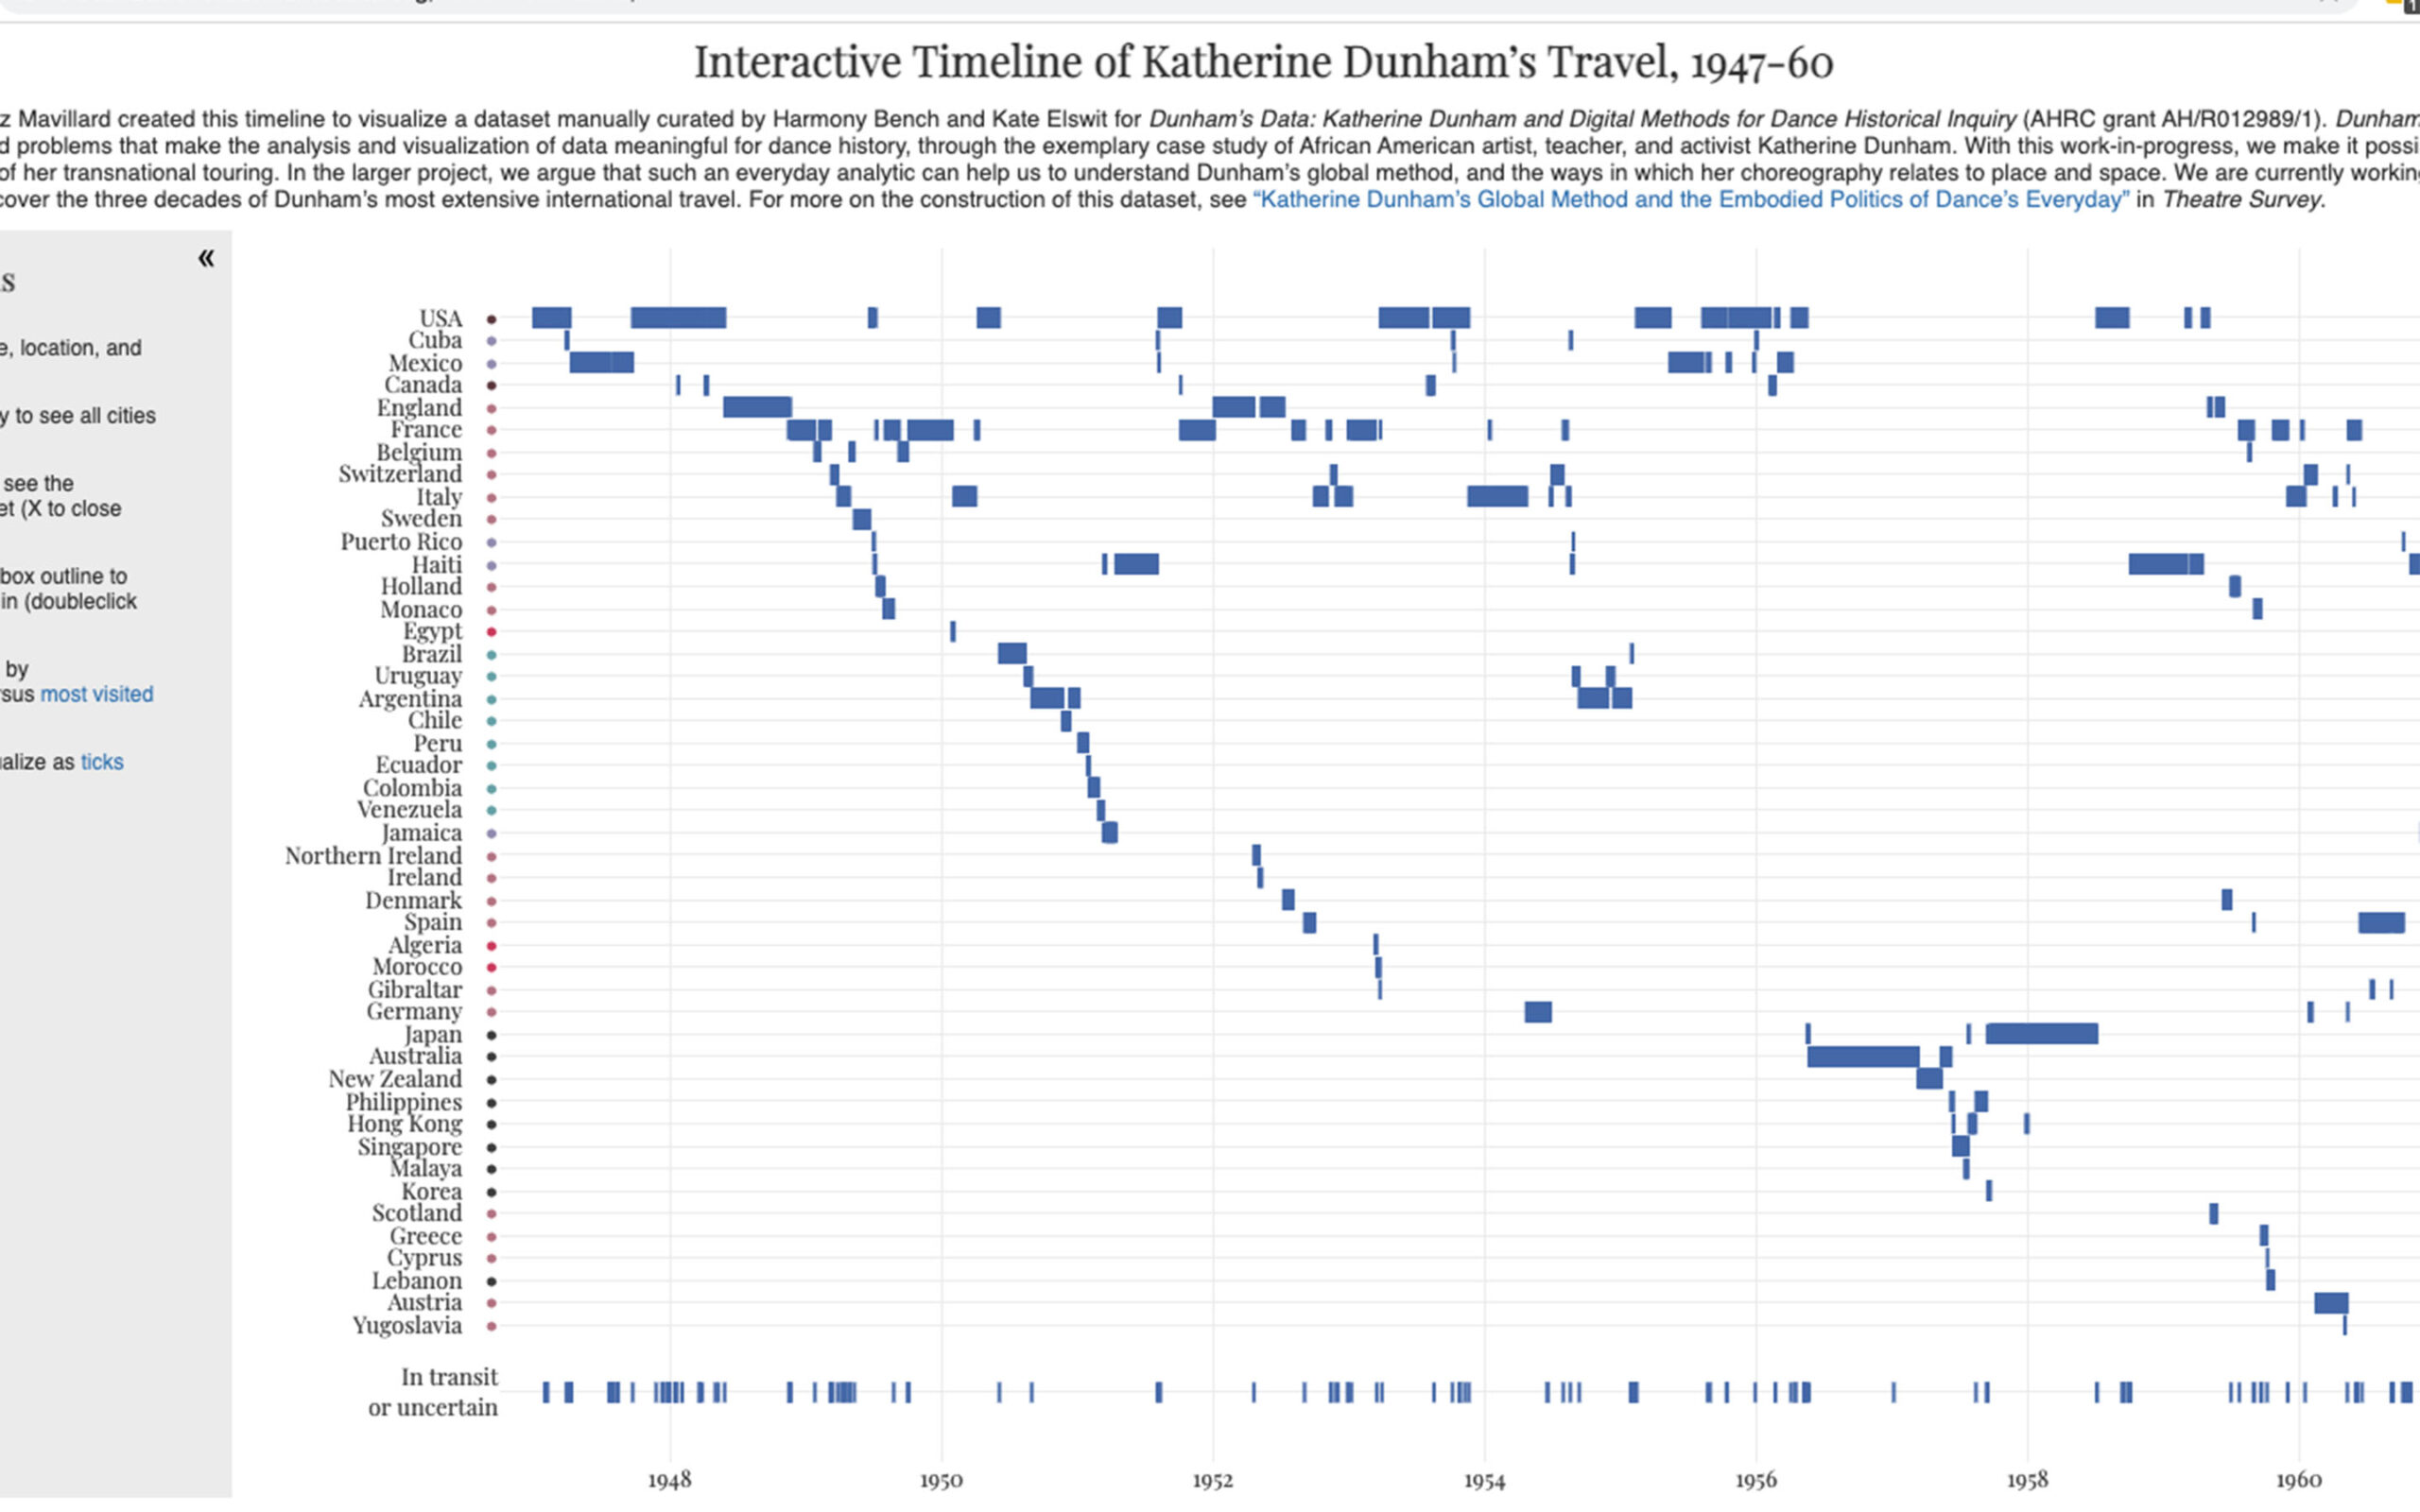 Interactive Timeline of Katherine Dunham’s Travel 1947-60, from Dunham’s Data